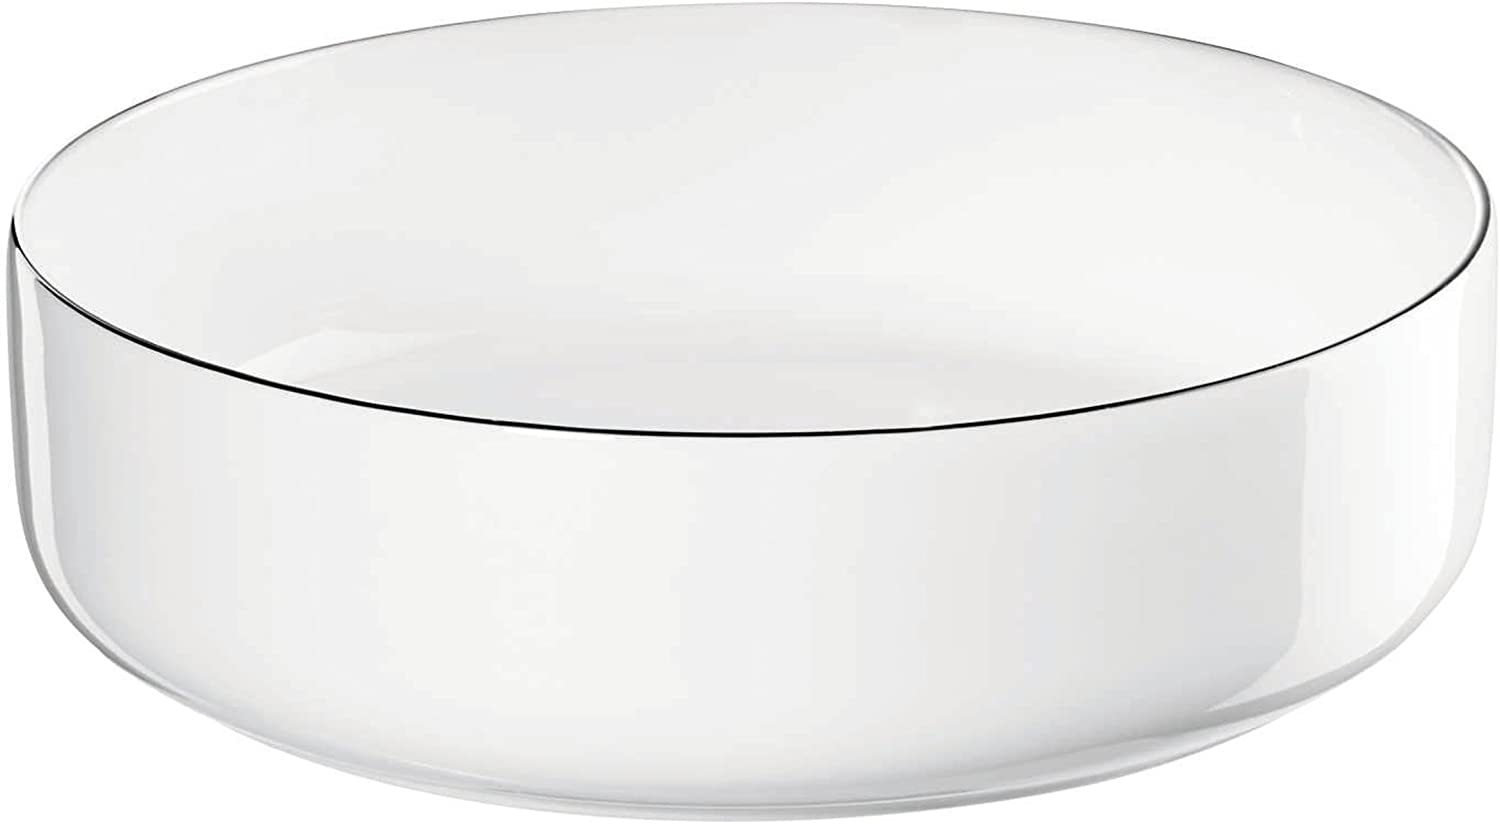 ASA Ocoligne Porcelain Bowl, White, 16.7 cm